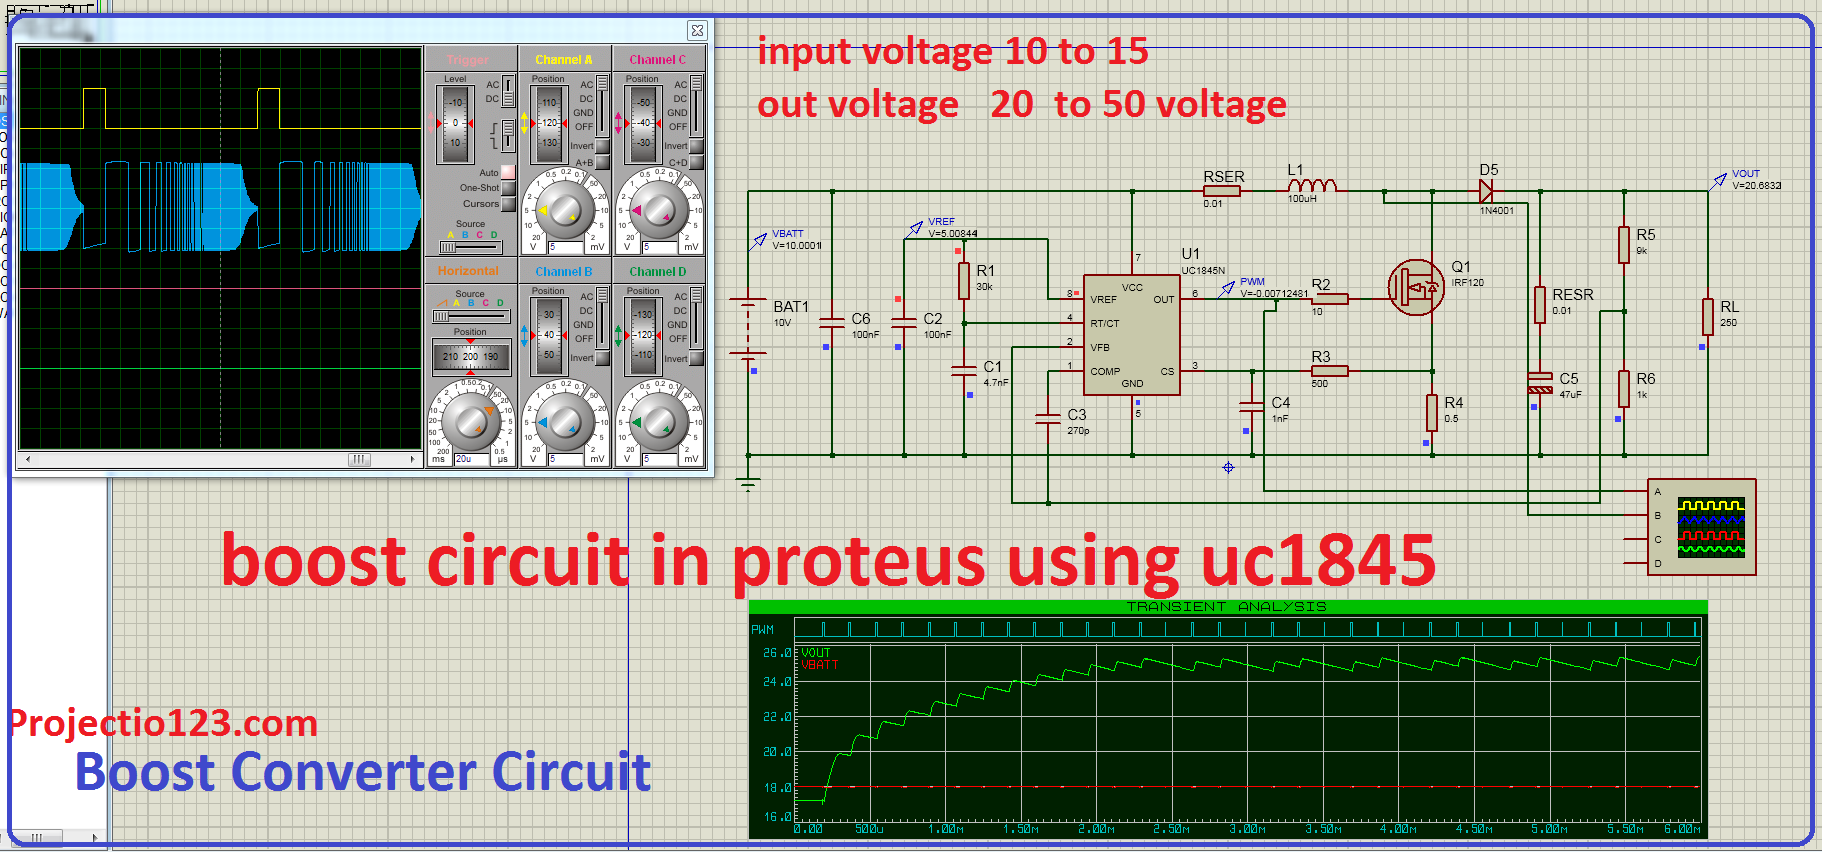 Boost Converter Circuit in Proteus Using uc1845